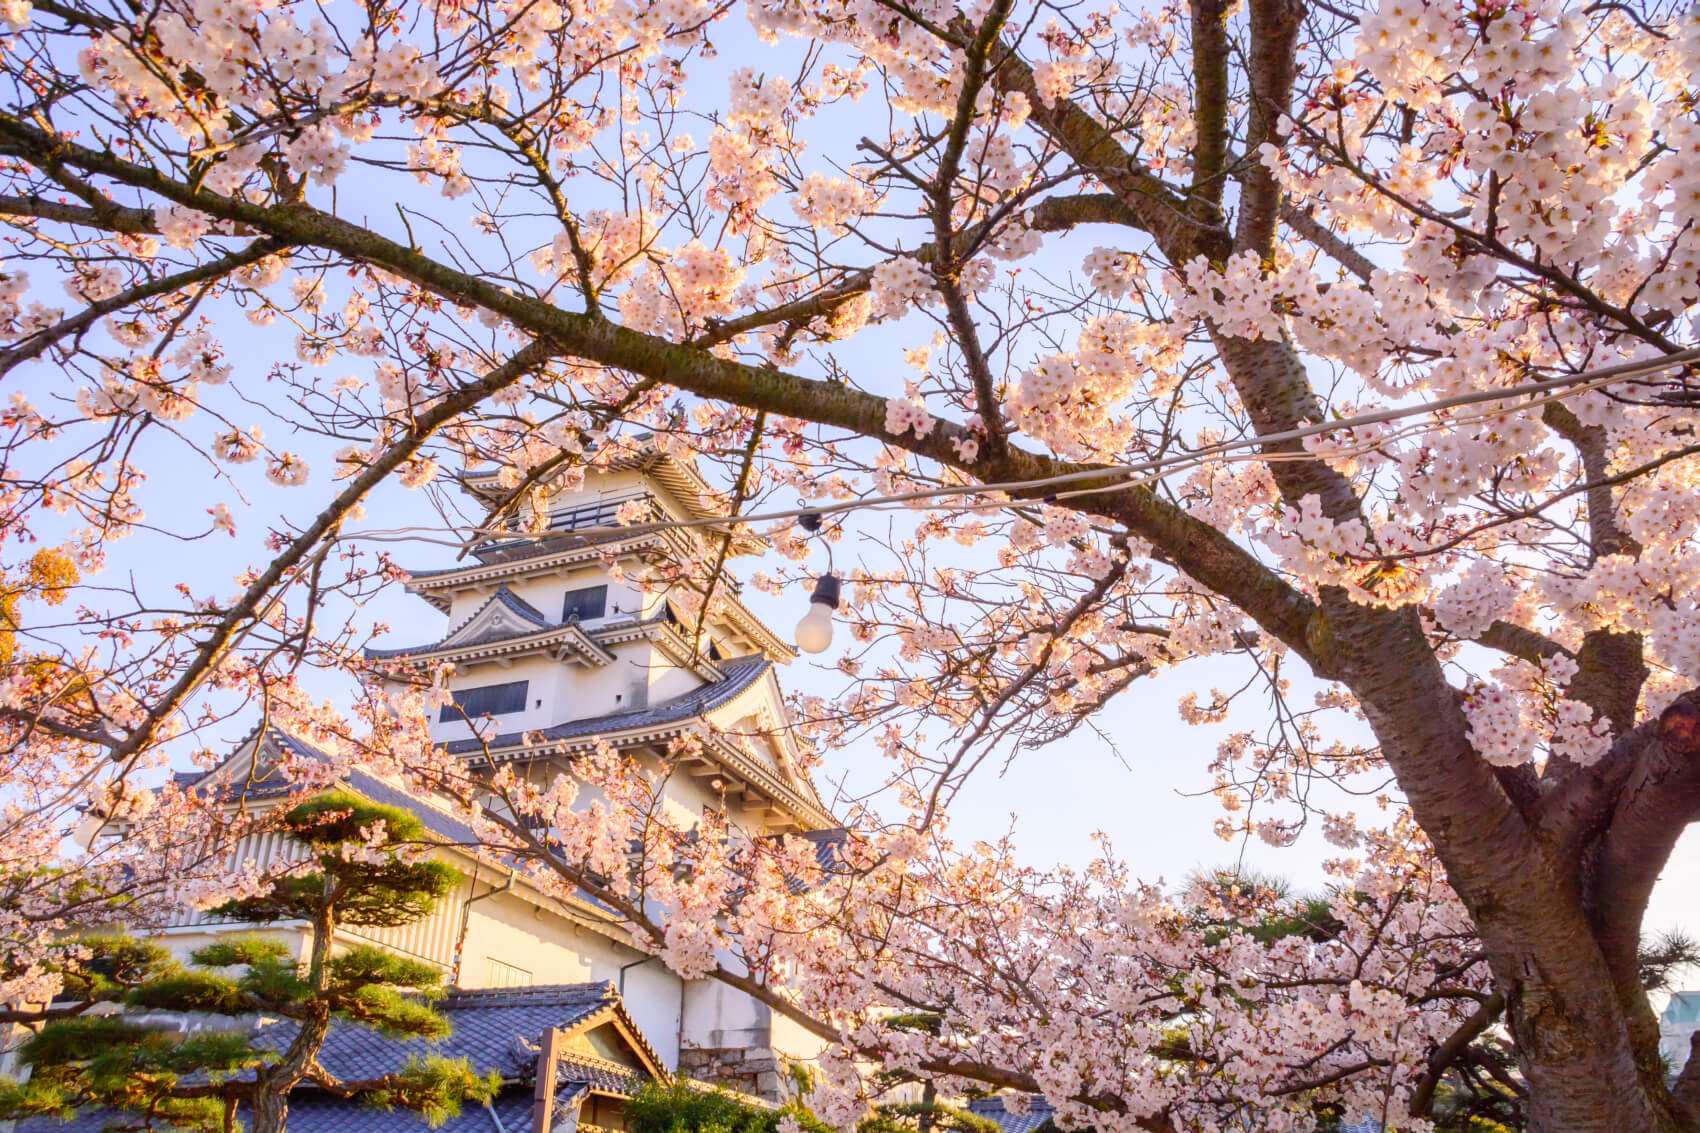 Cherry Blossom Viewing at Imabari-jō CastleOverlooking the Seto Inland Sea